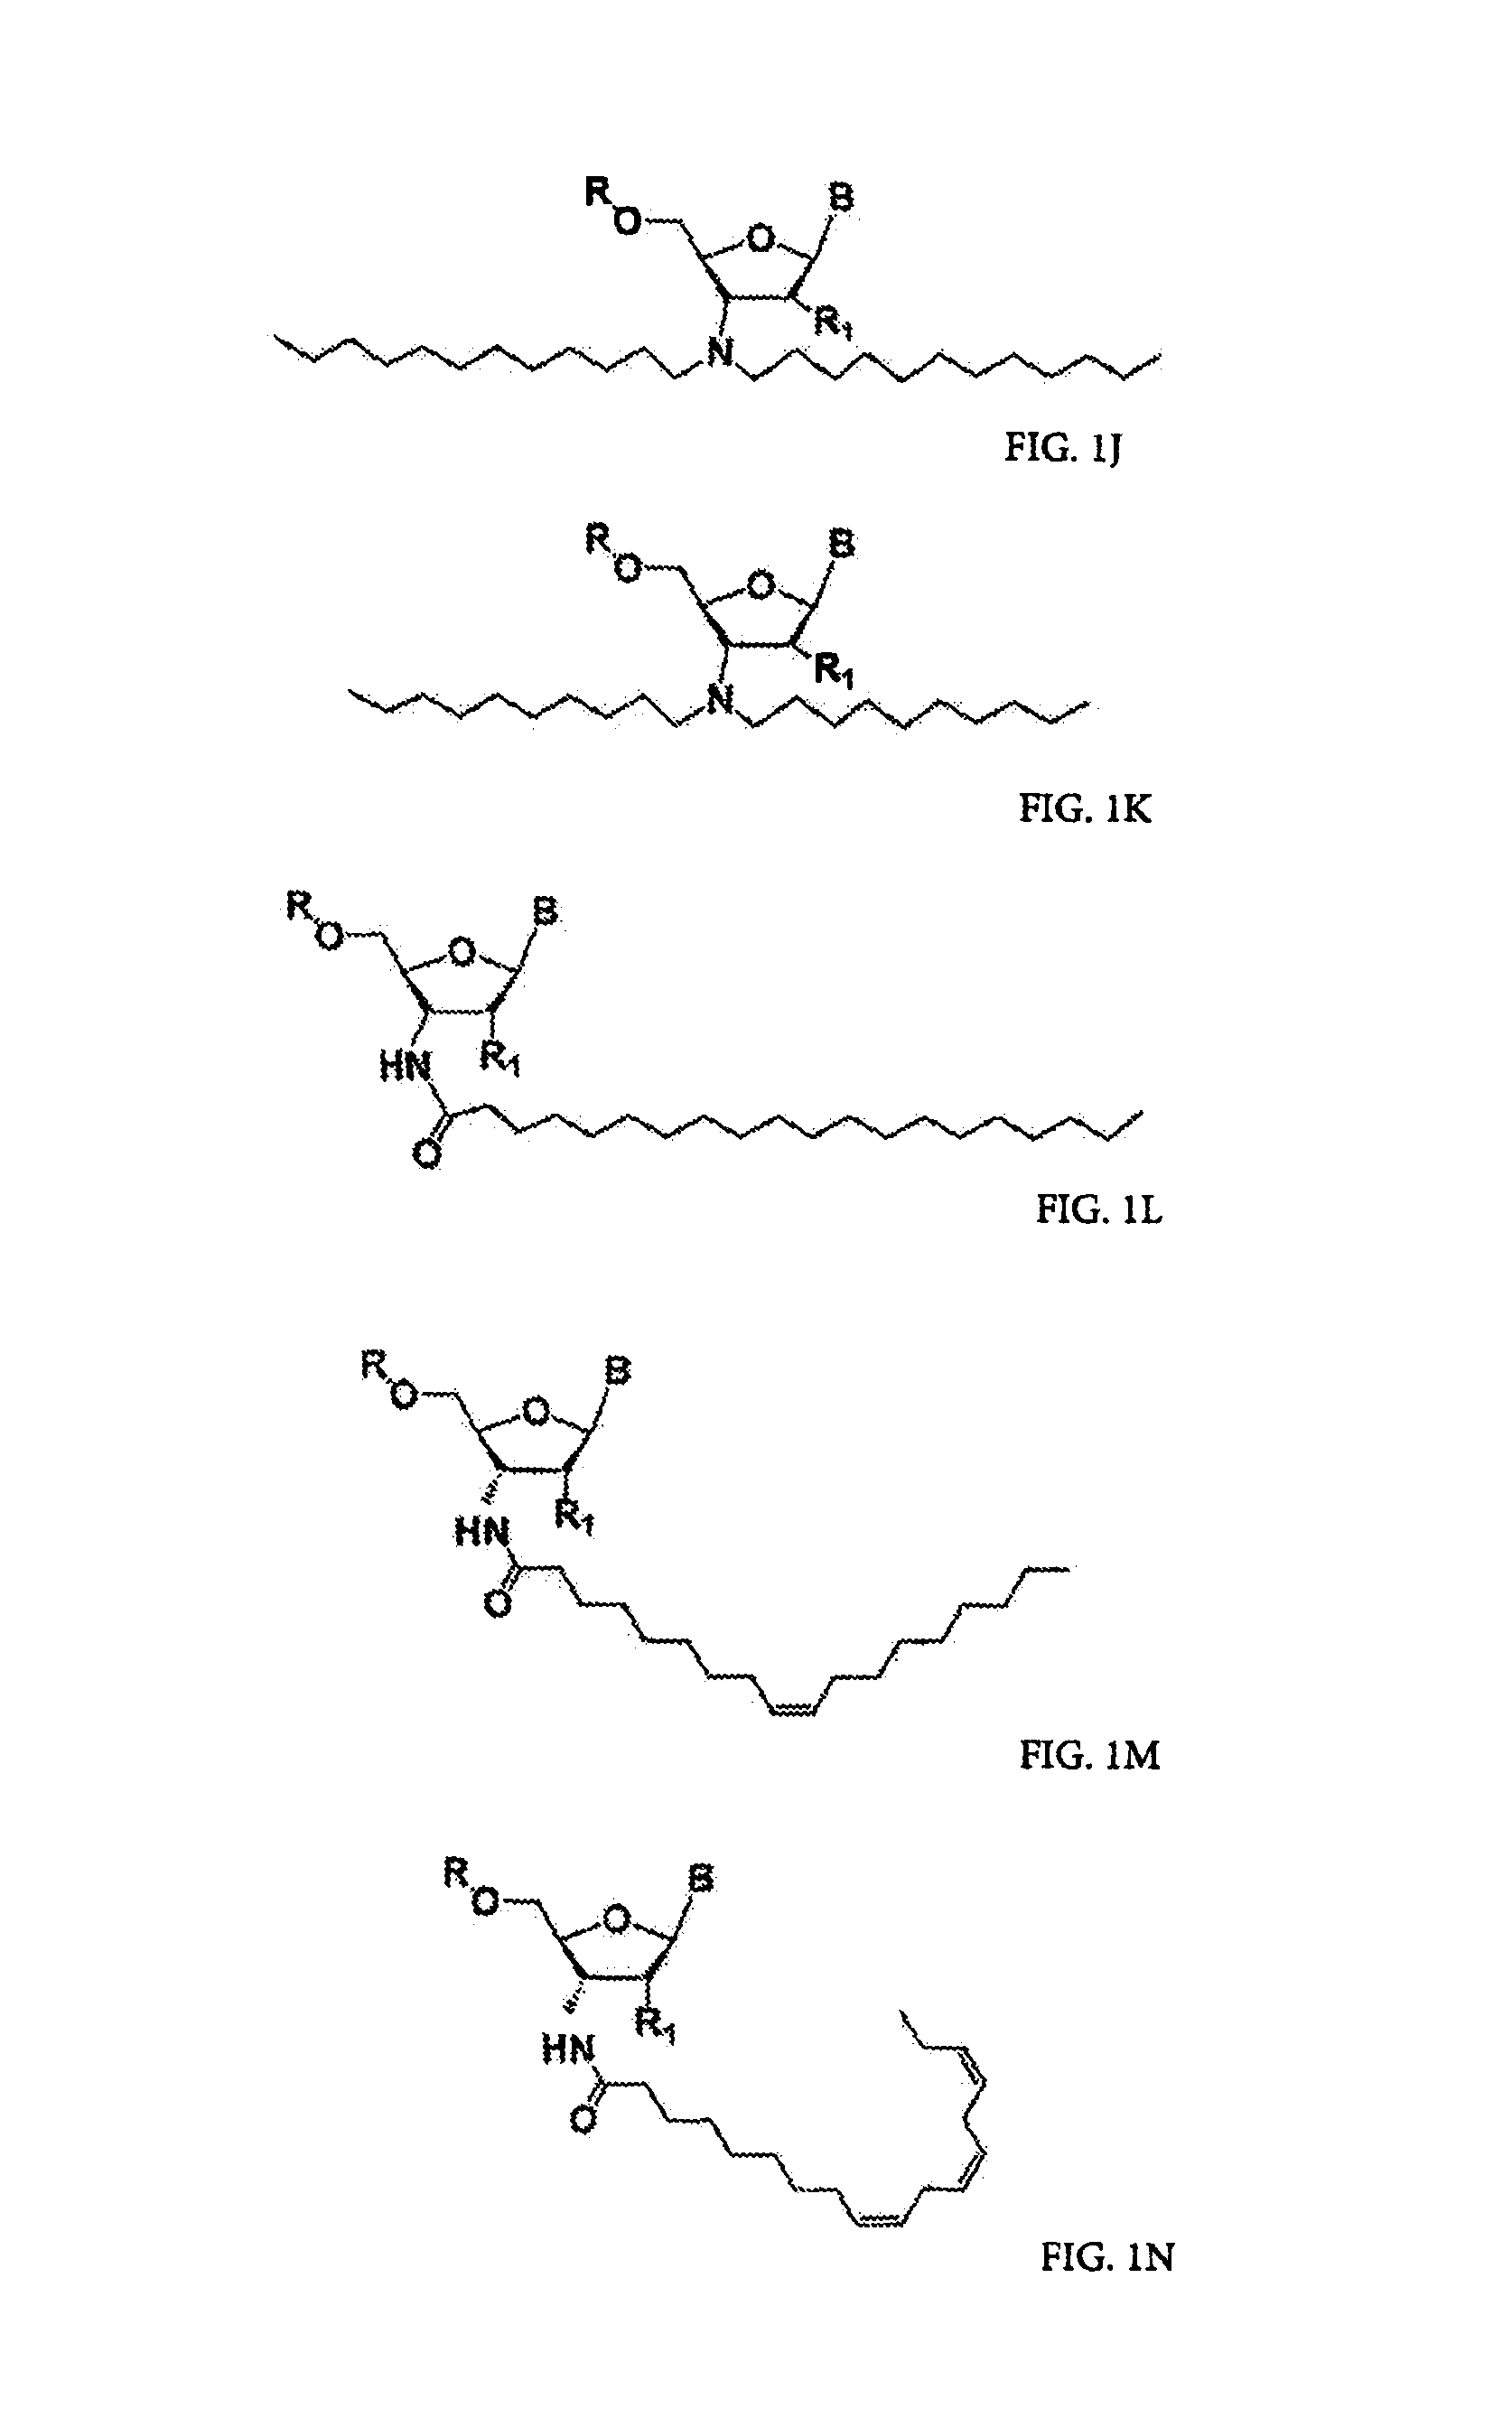 RNA amidates and thioamidates for RNAi